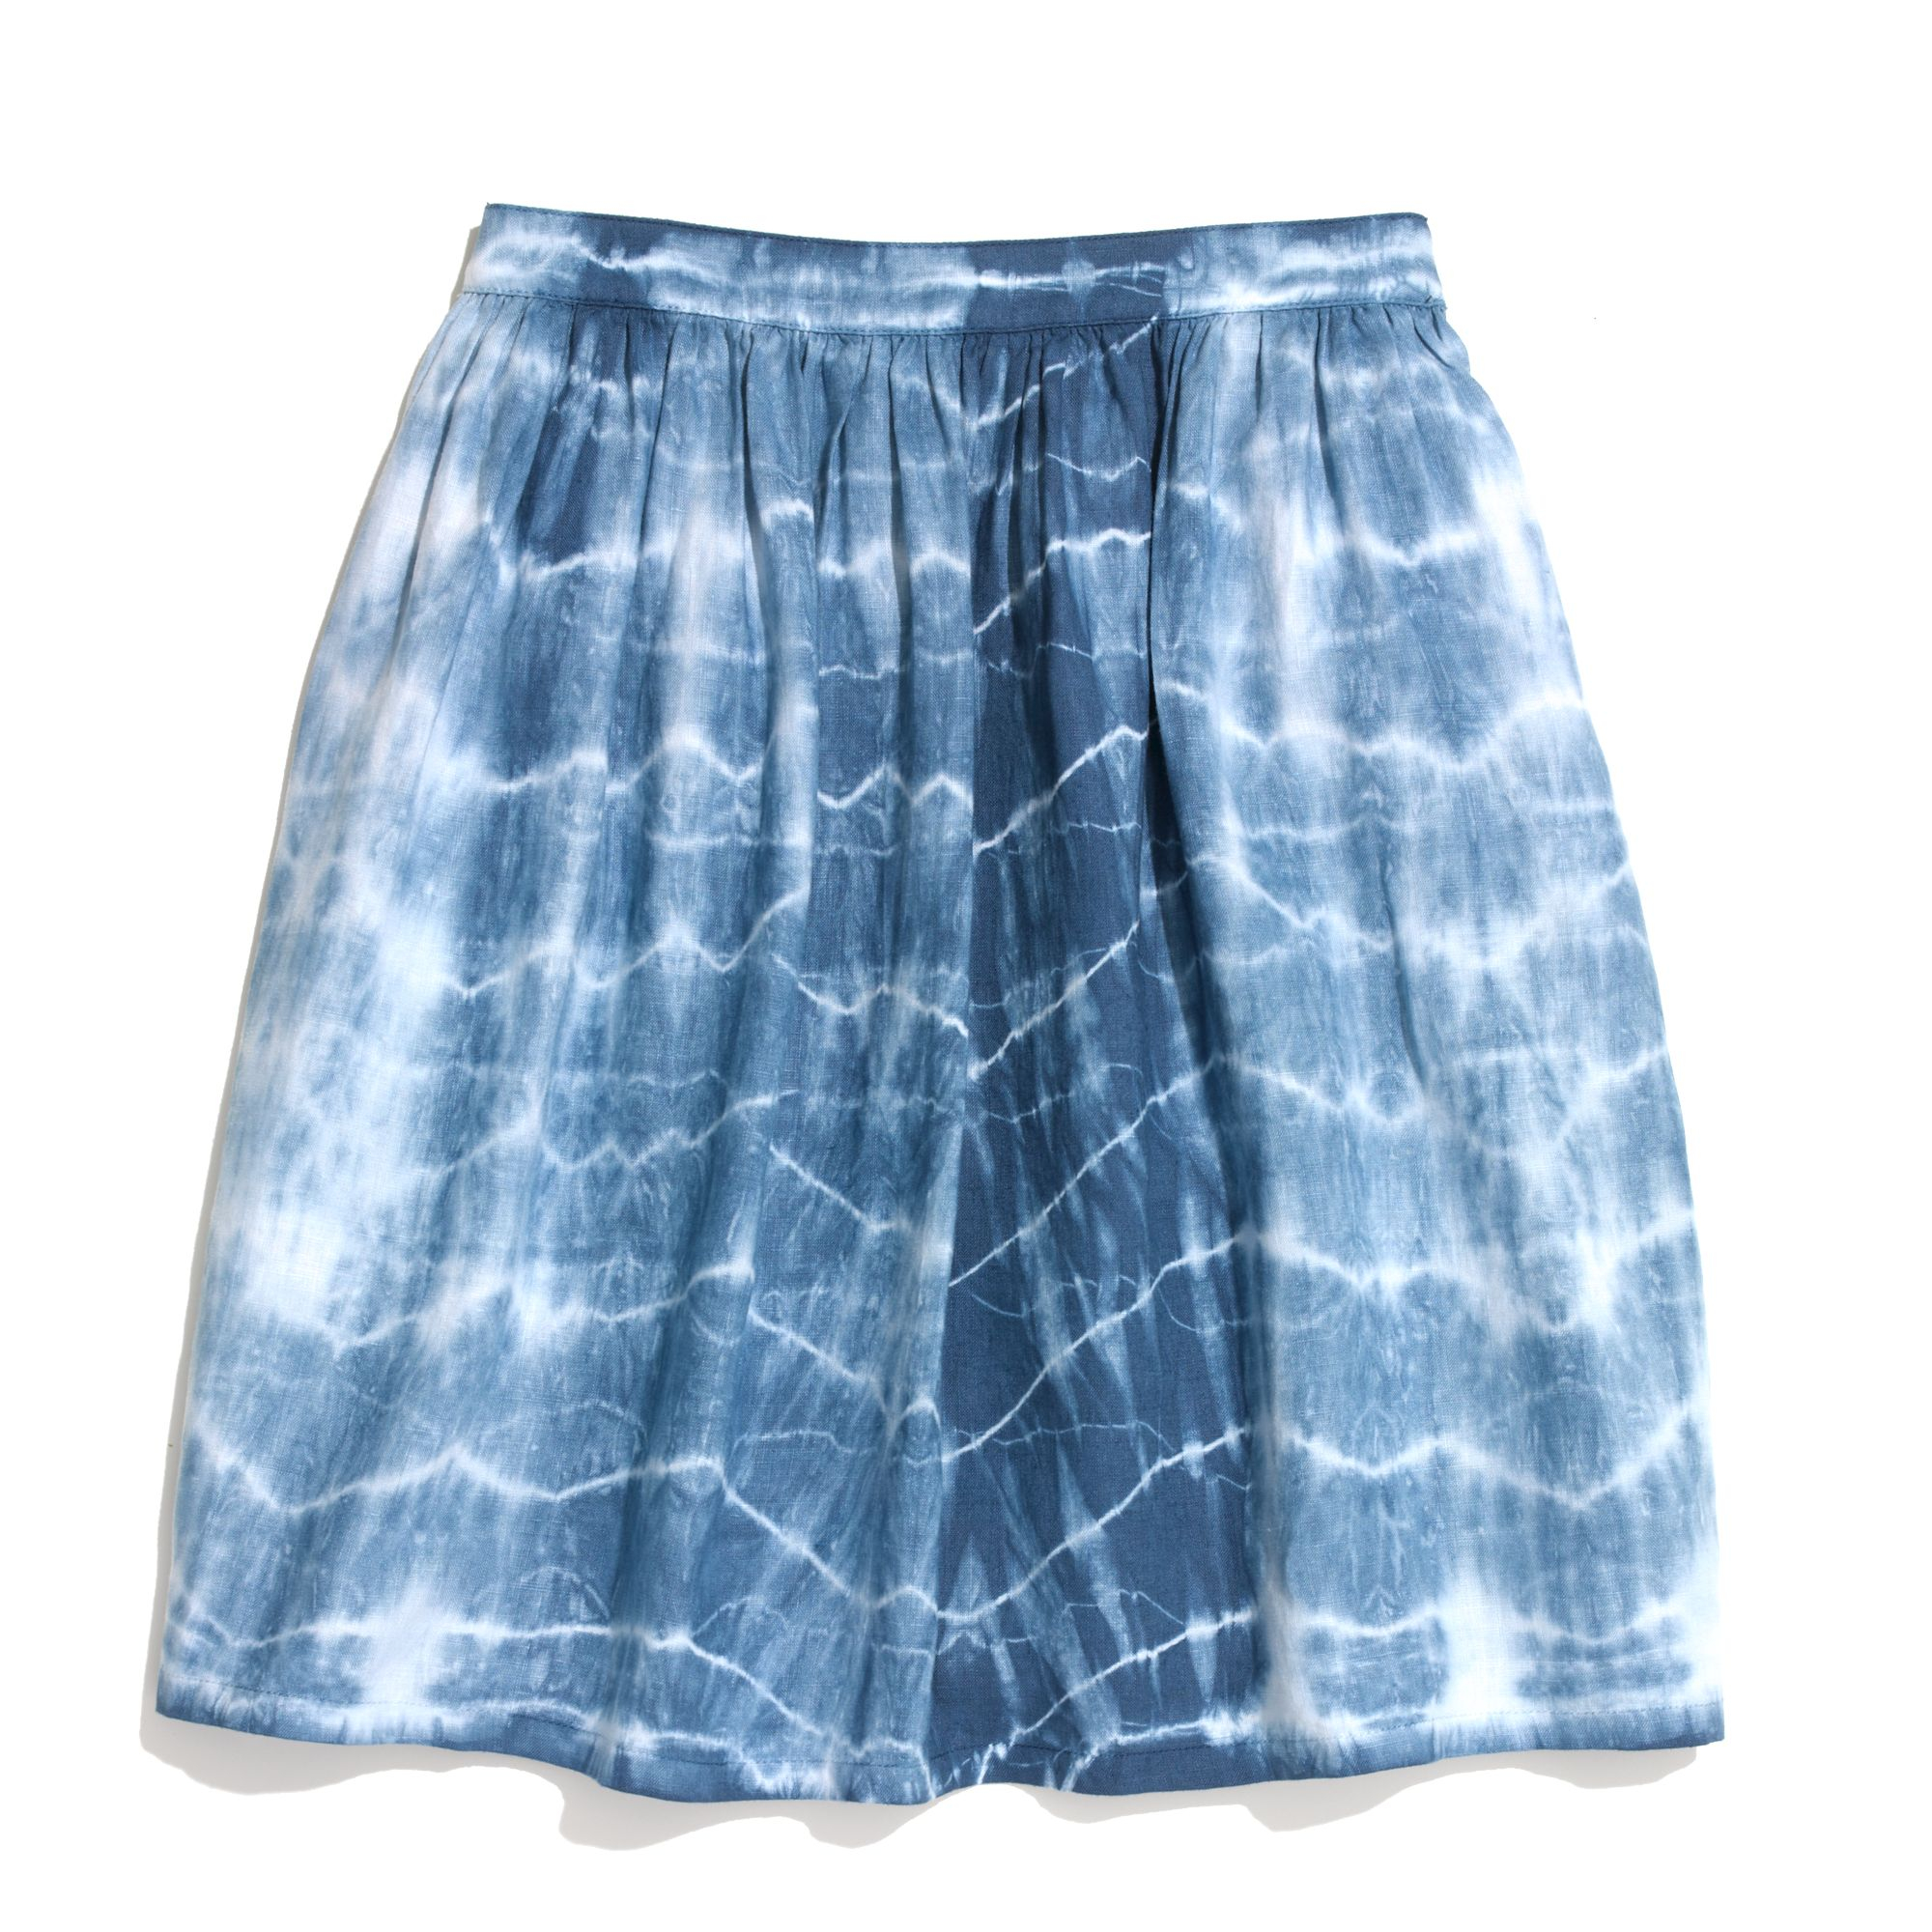 Lyst - Madewell Indigo Shibori Linen Skirt in Blue